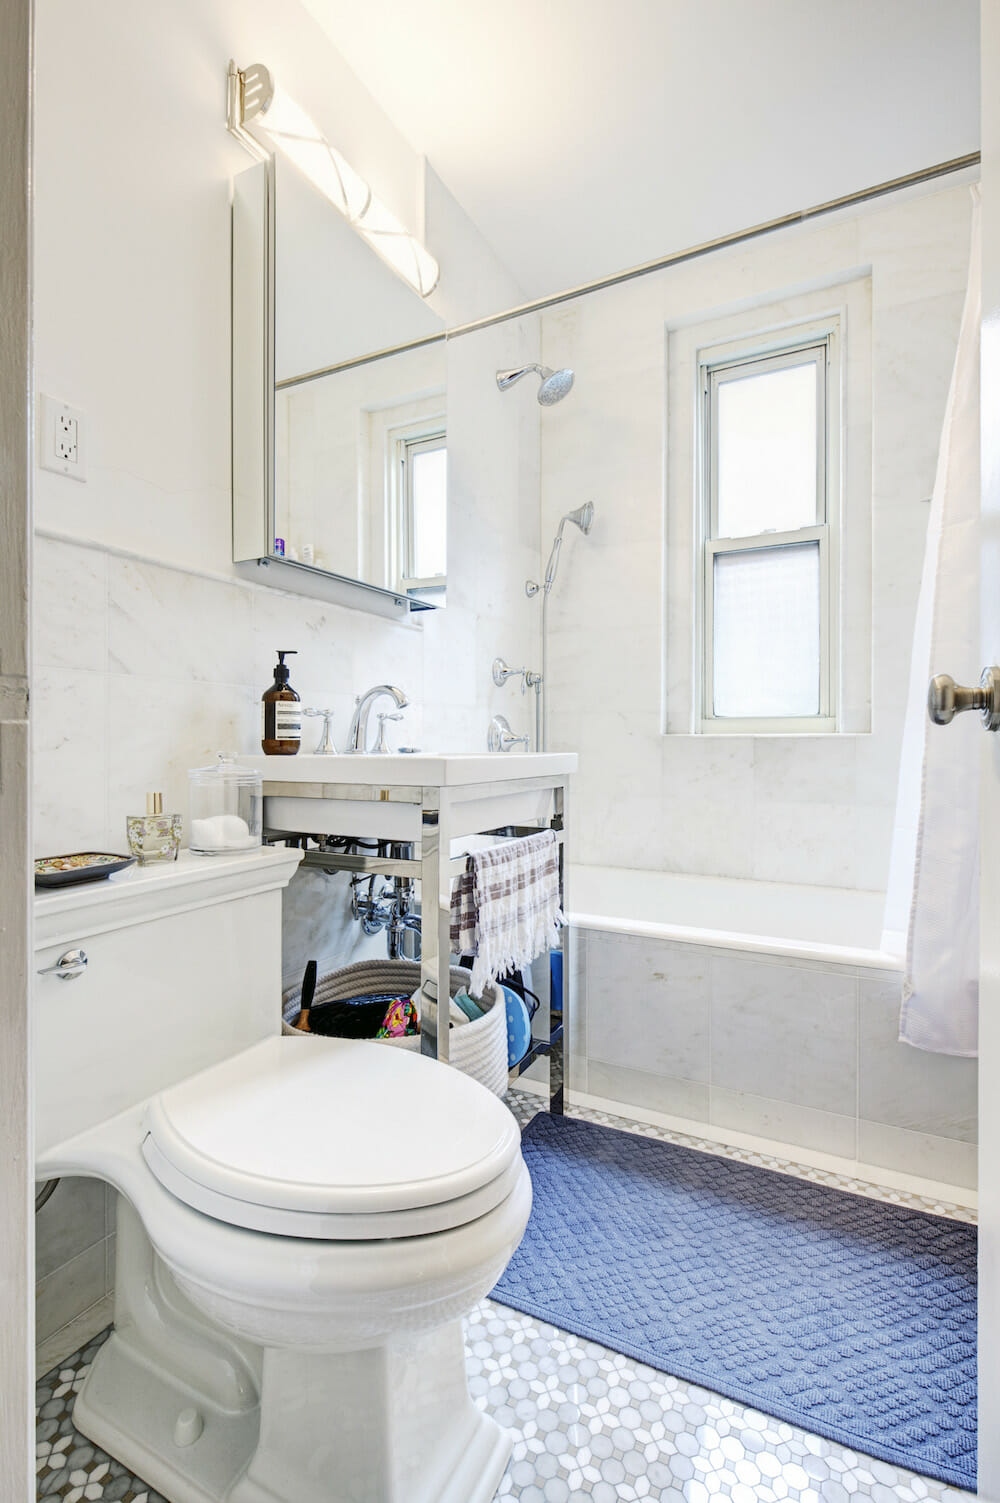 The Shower Corner Shelf: 5 elegant ideas for storage